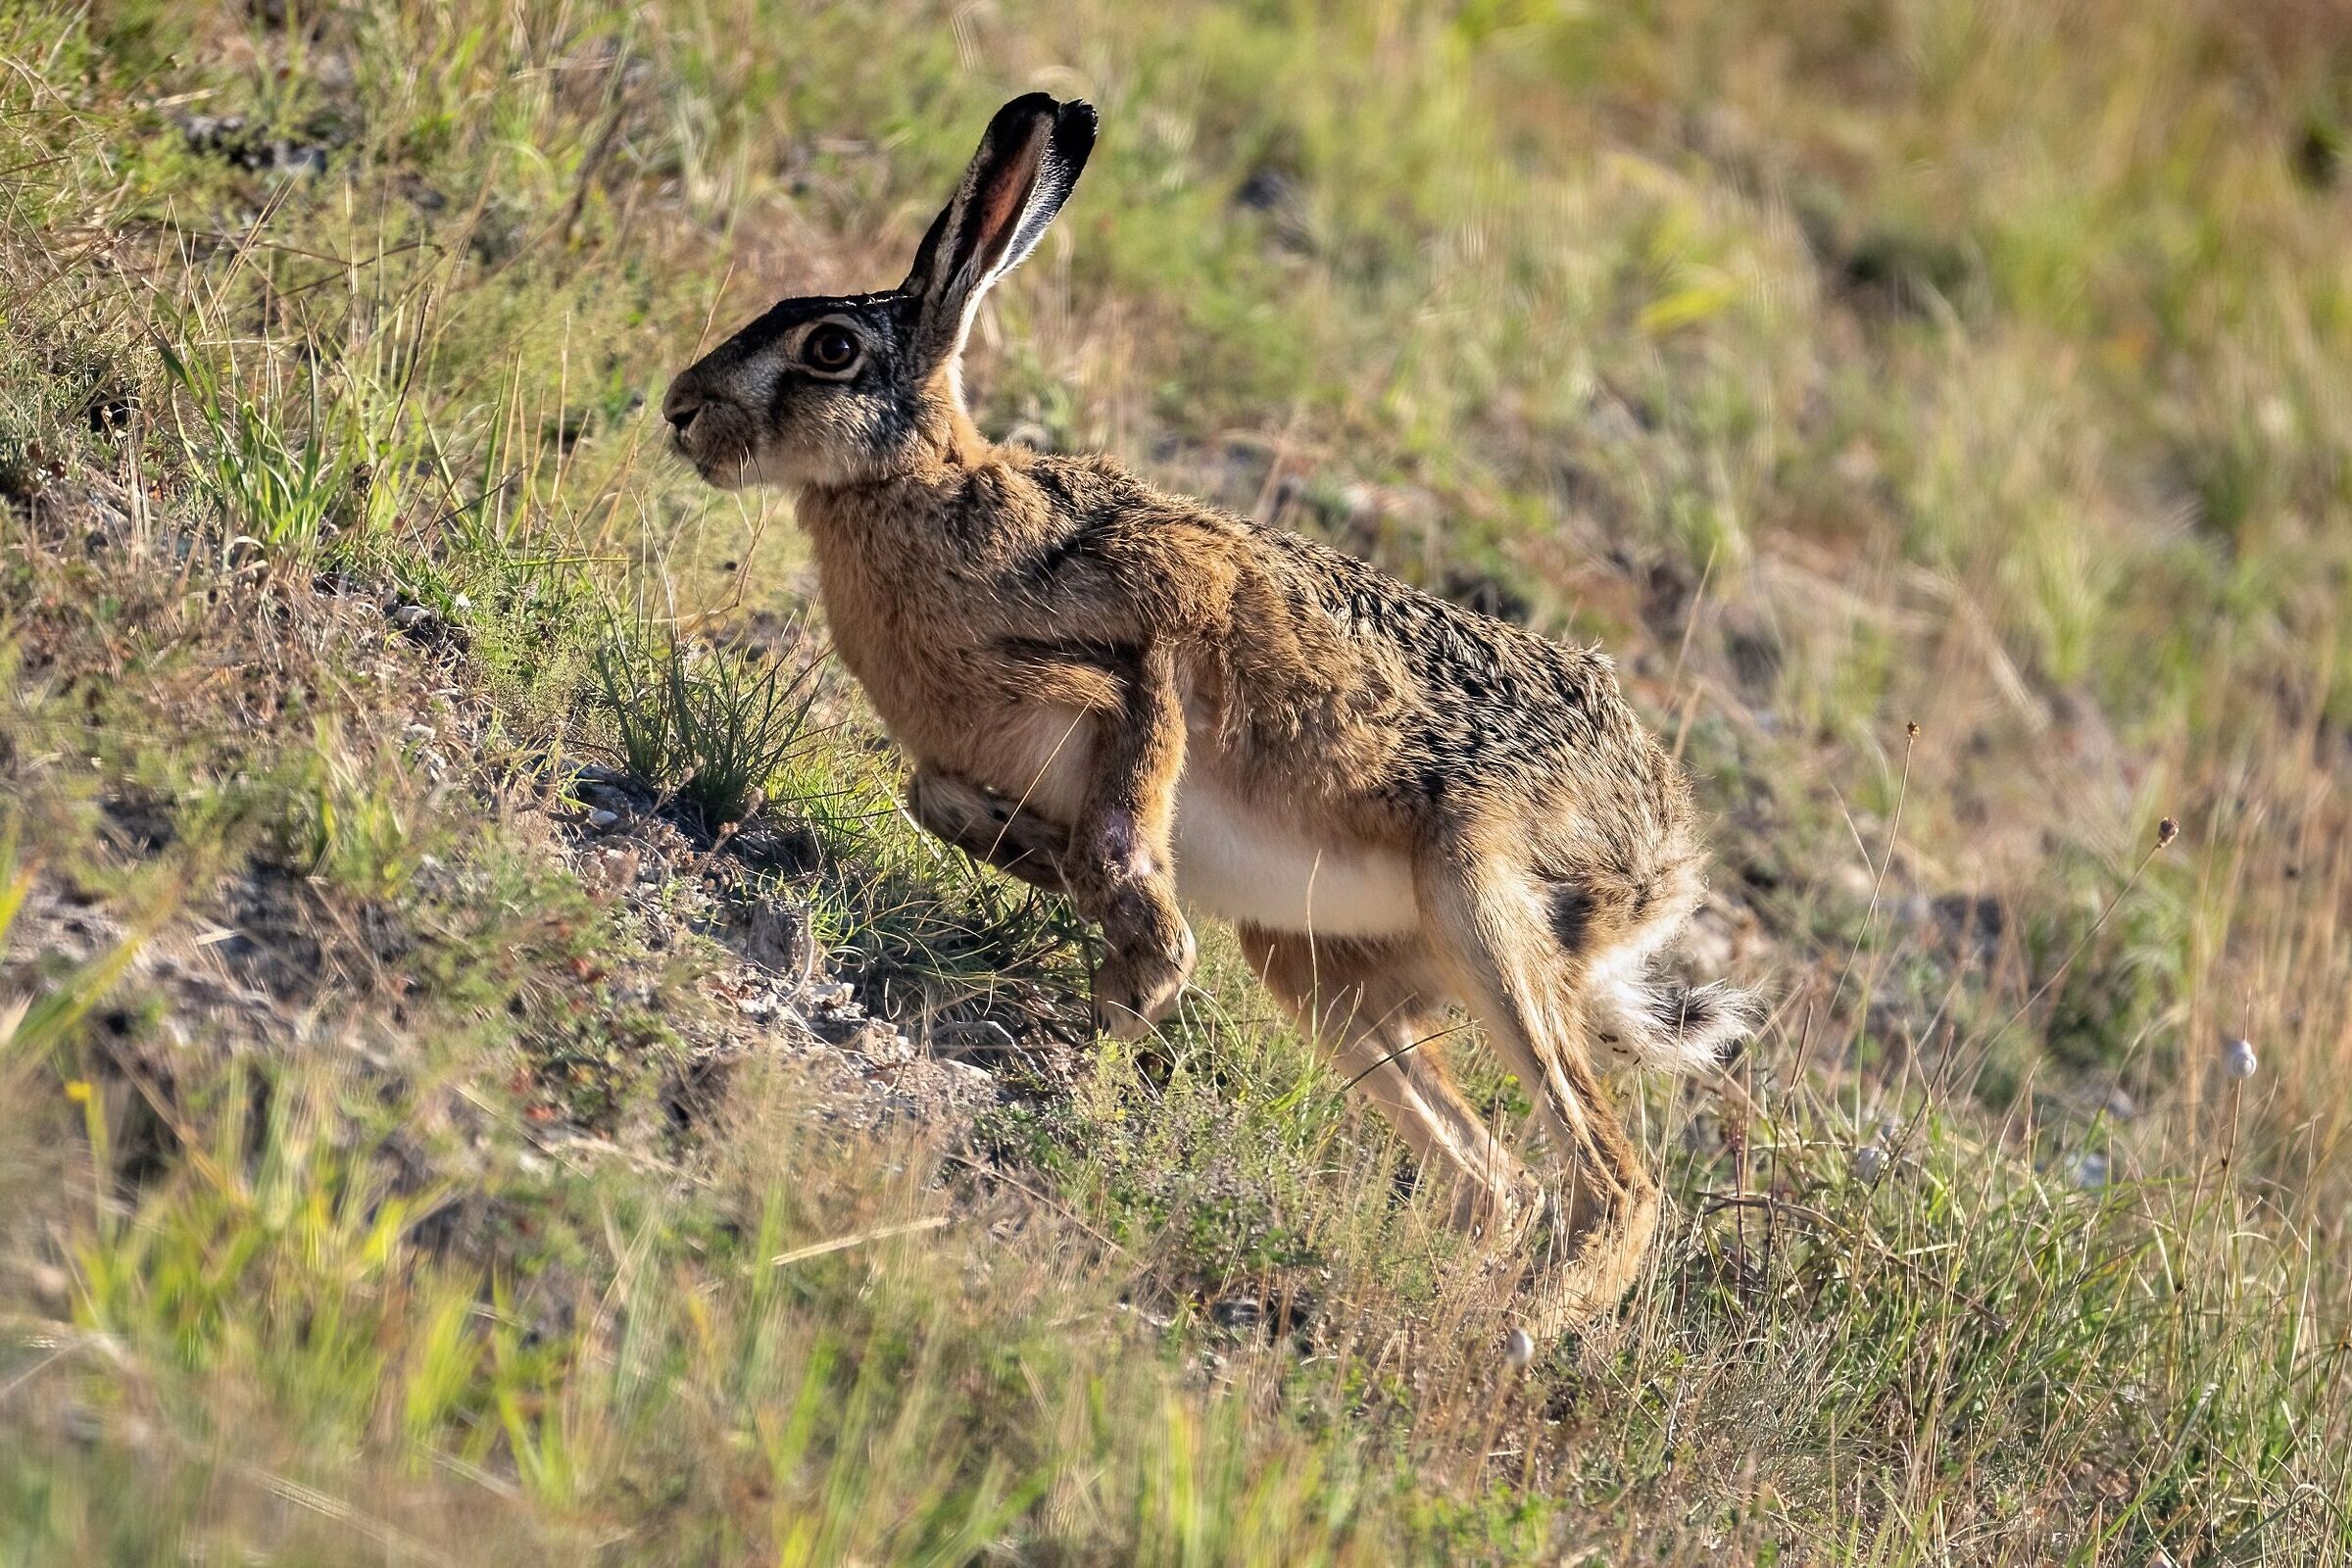 A hare on the run...